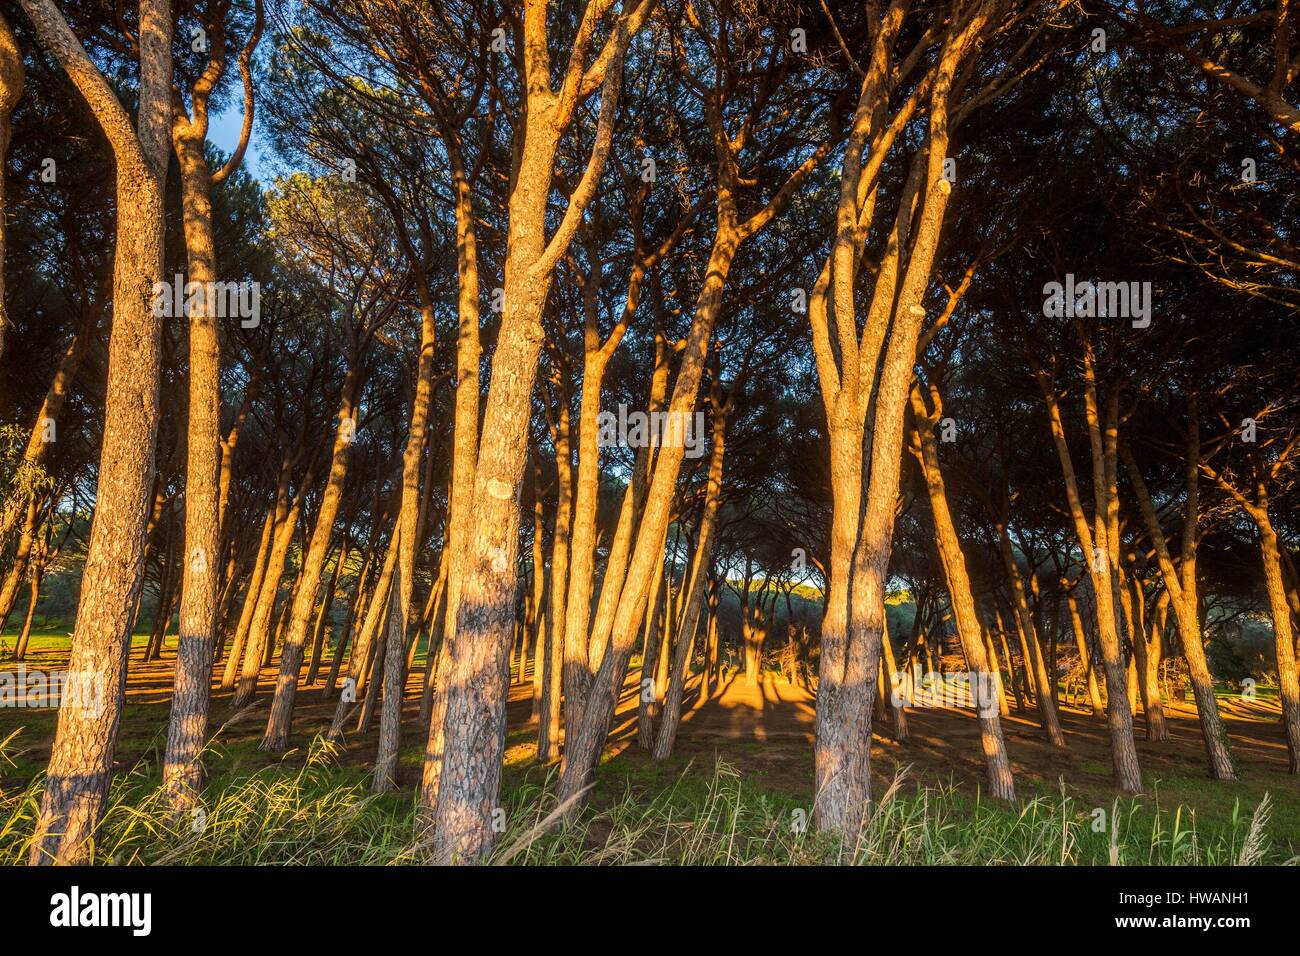 France, Var, Frejus, forest of Stone pine (Pinus pinea) of the Park Aurelien Stock Photo